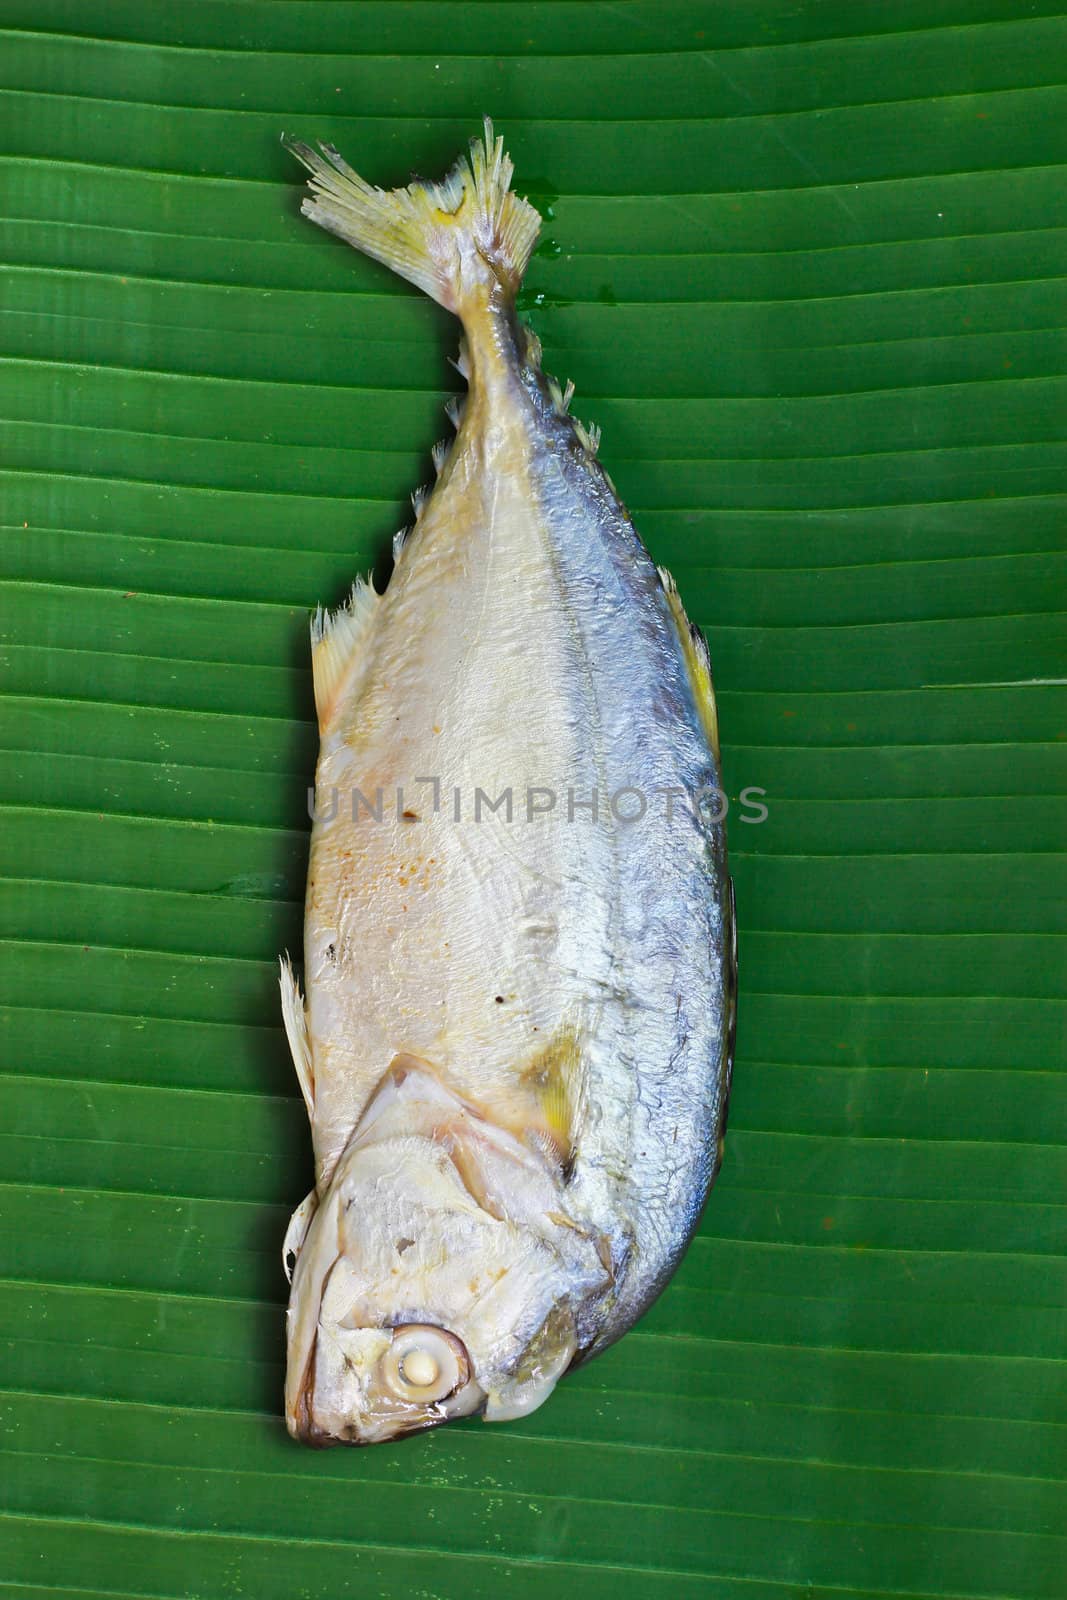 Chub mackerel on a banana leaf